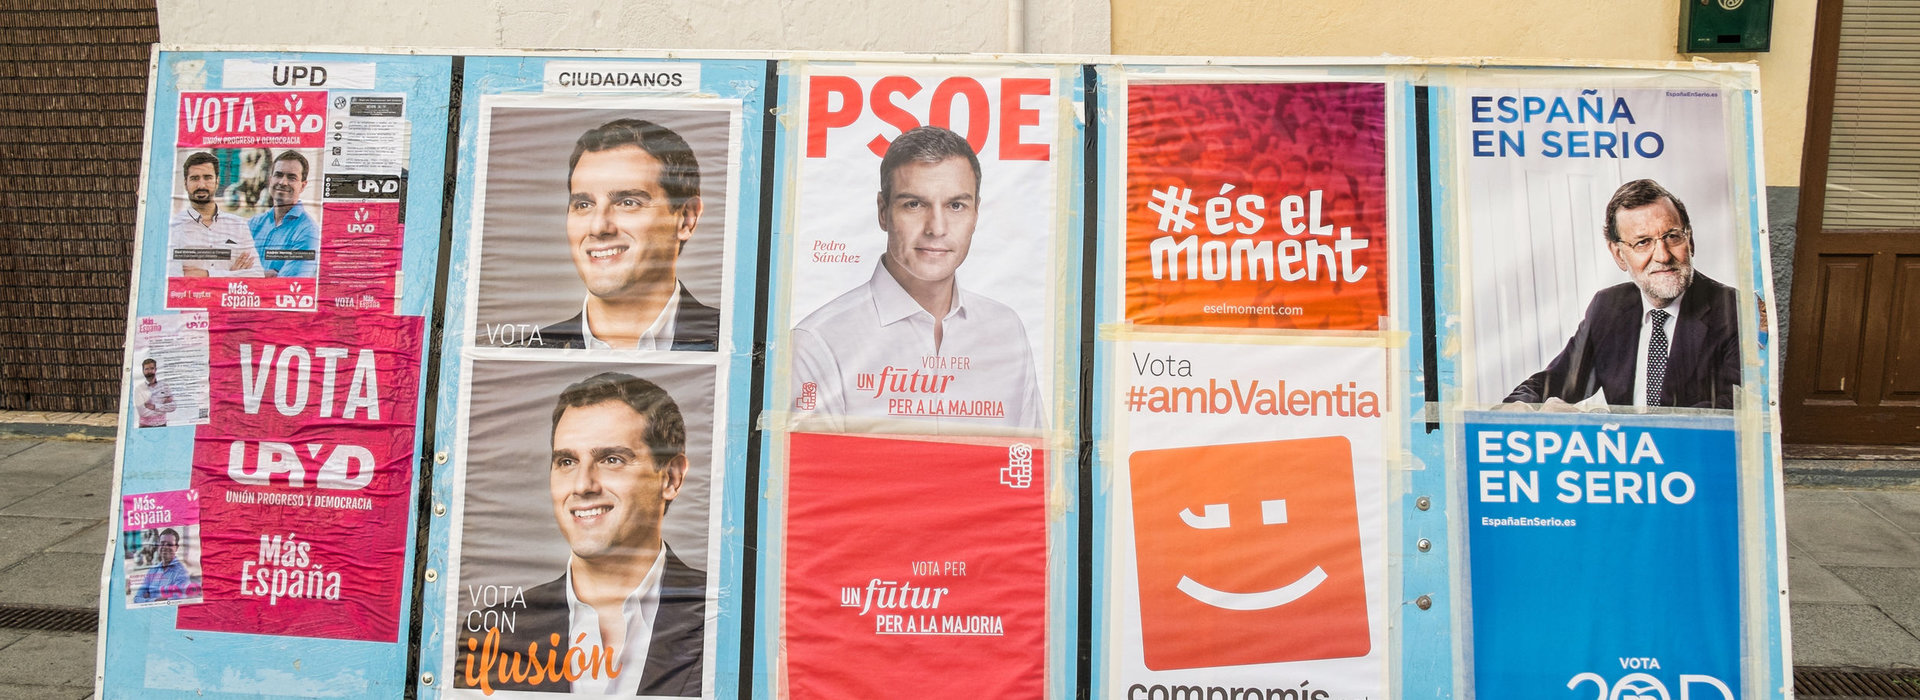 Rajoy PP Spanien